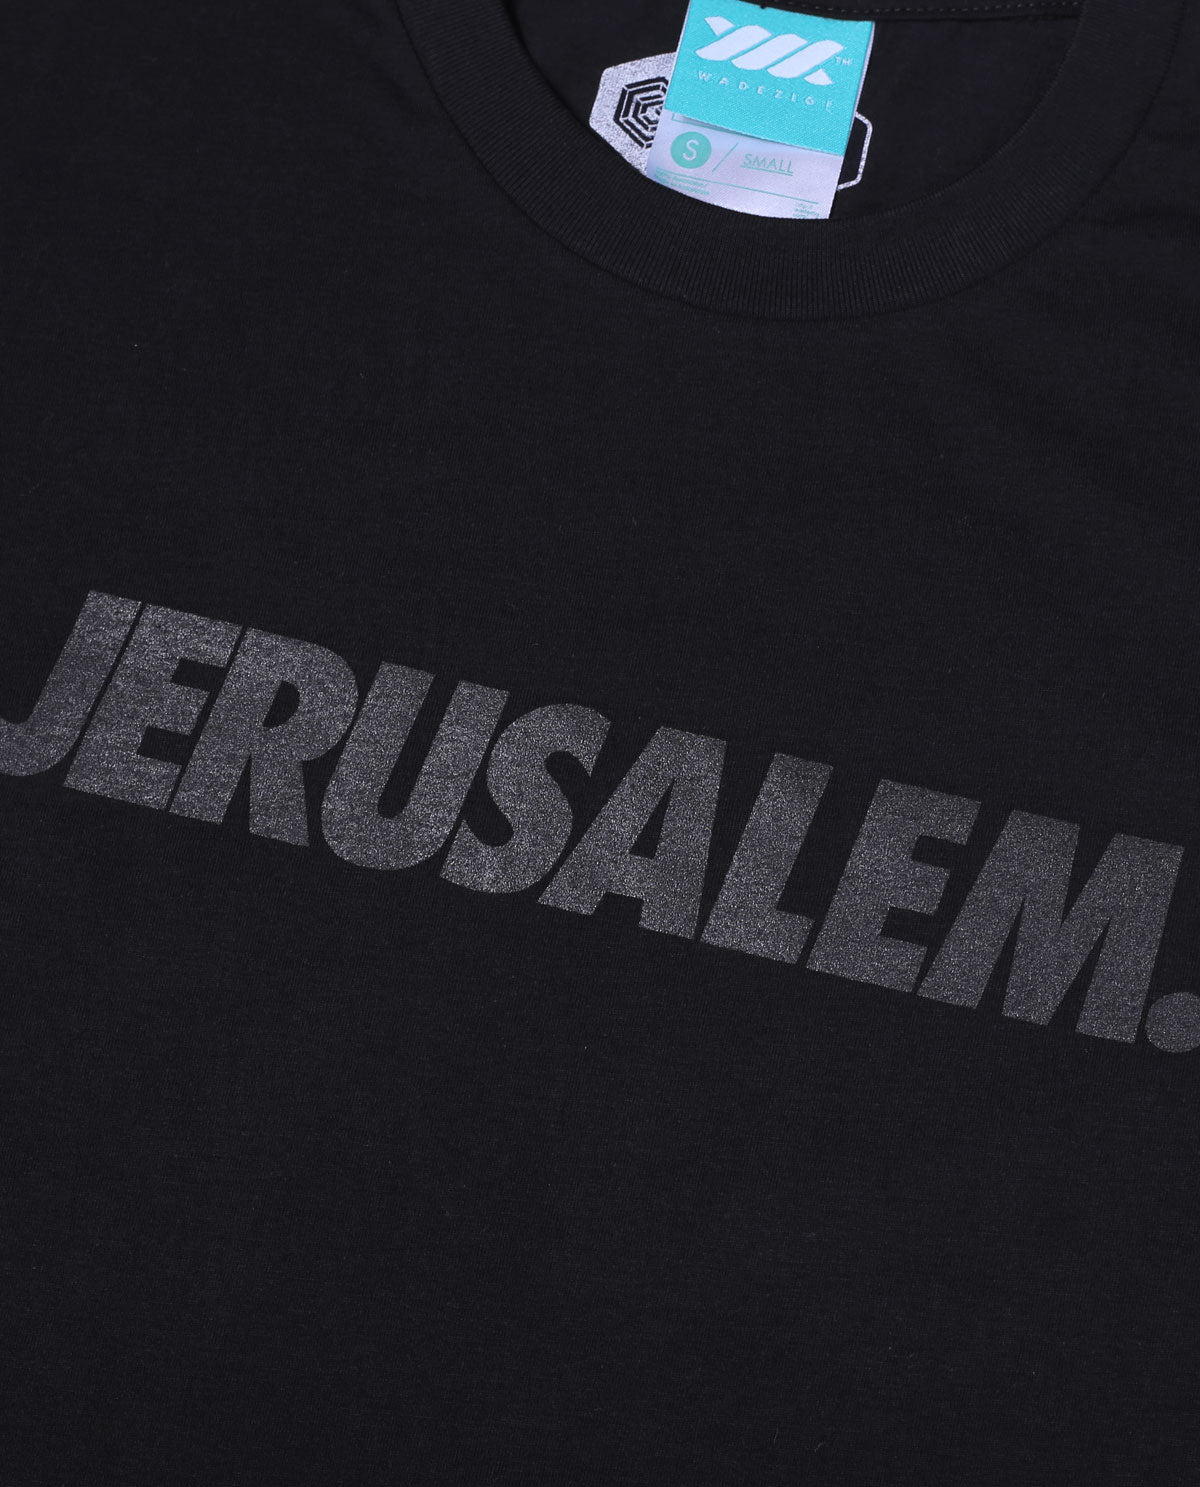 WADEZIG! T-SHIRT - JERUSALEM BLACK ON BLACK #3